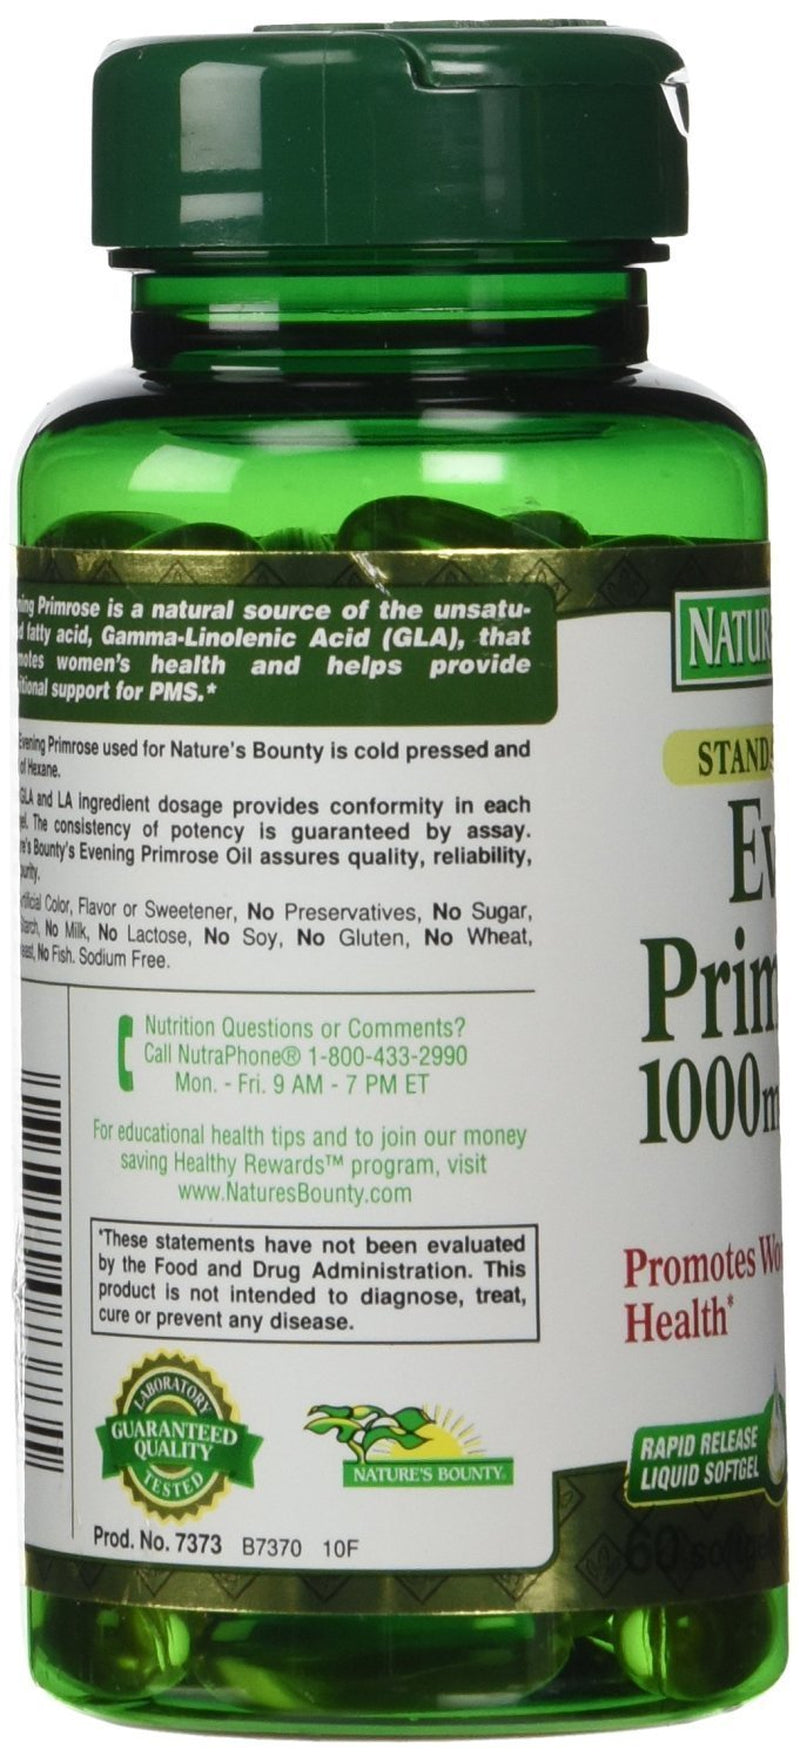 Nature'S Bounty Evening Primrose Oil 1000 Mg Softgels 60 Each